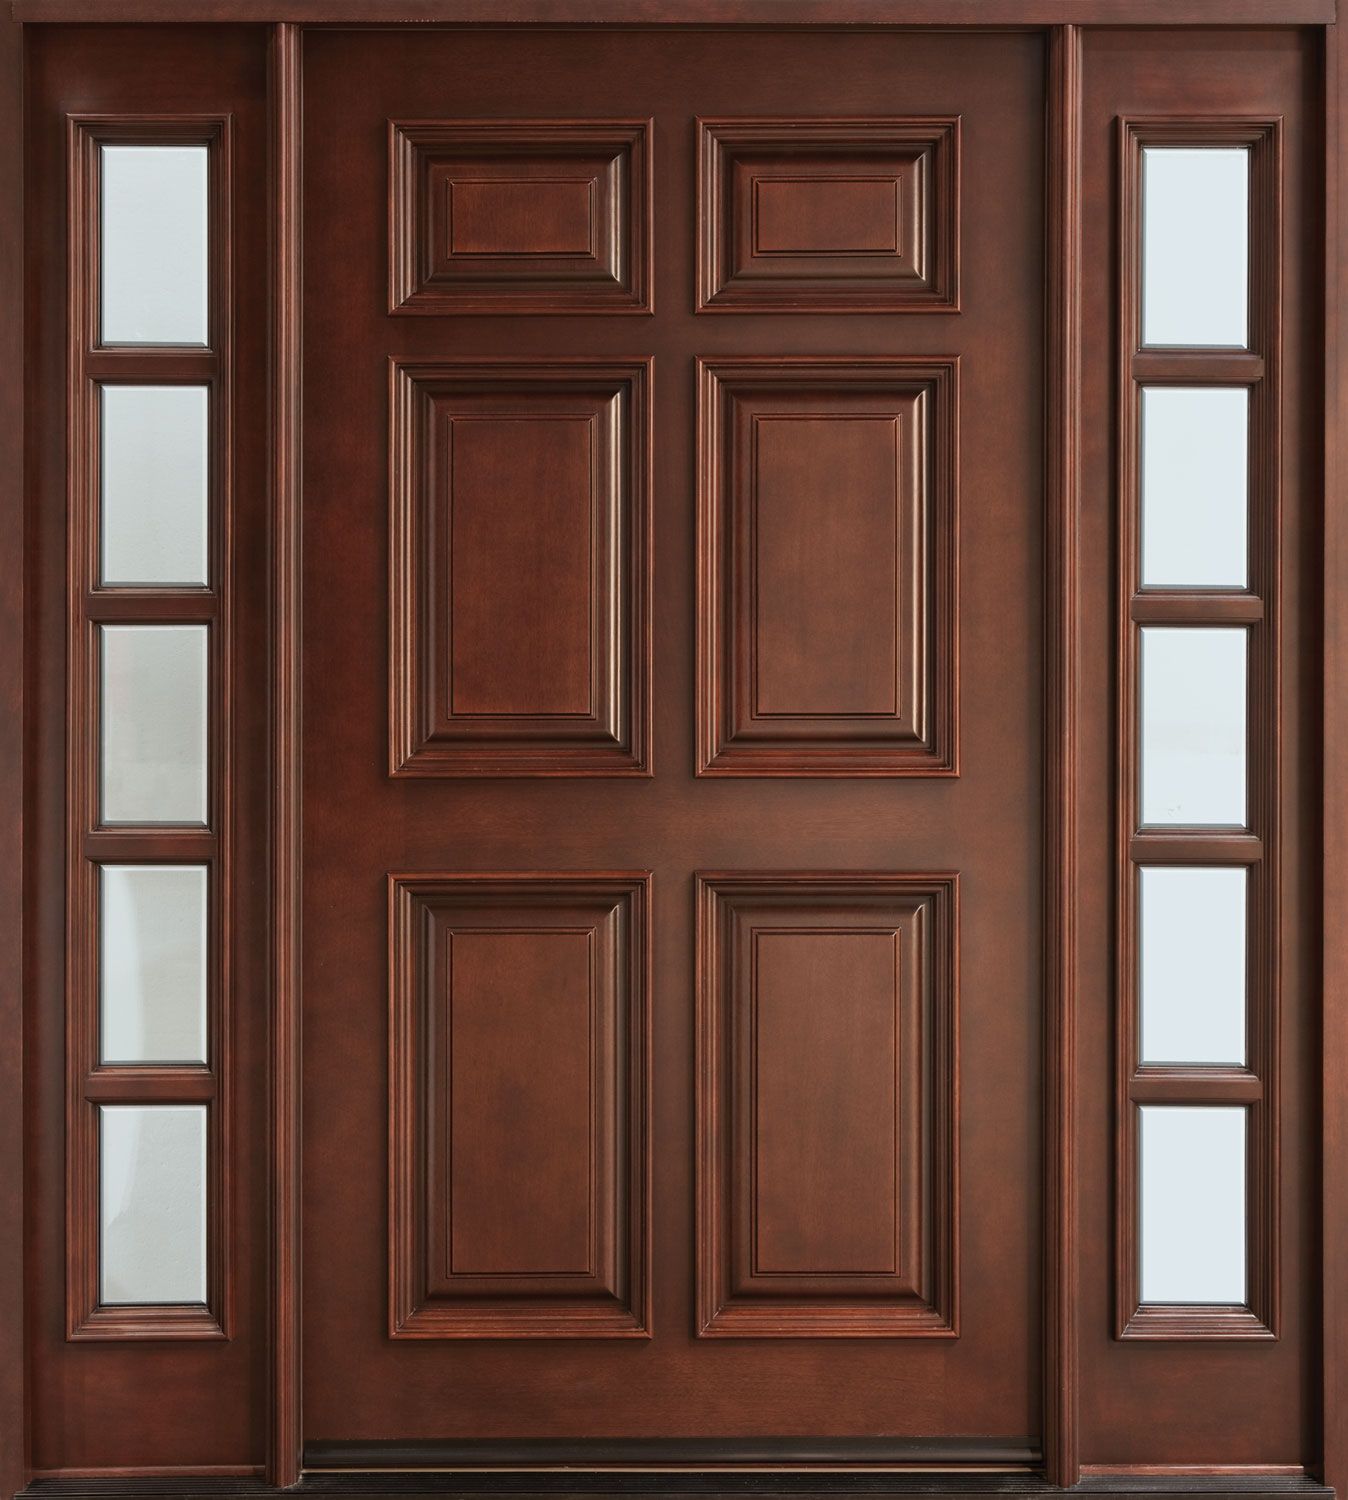 Free photo: Wooden door pattern, Old, Shape